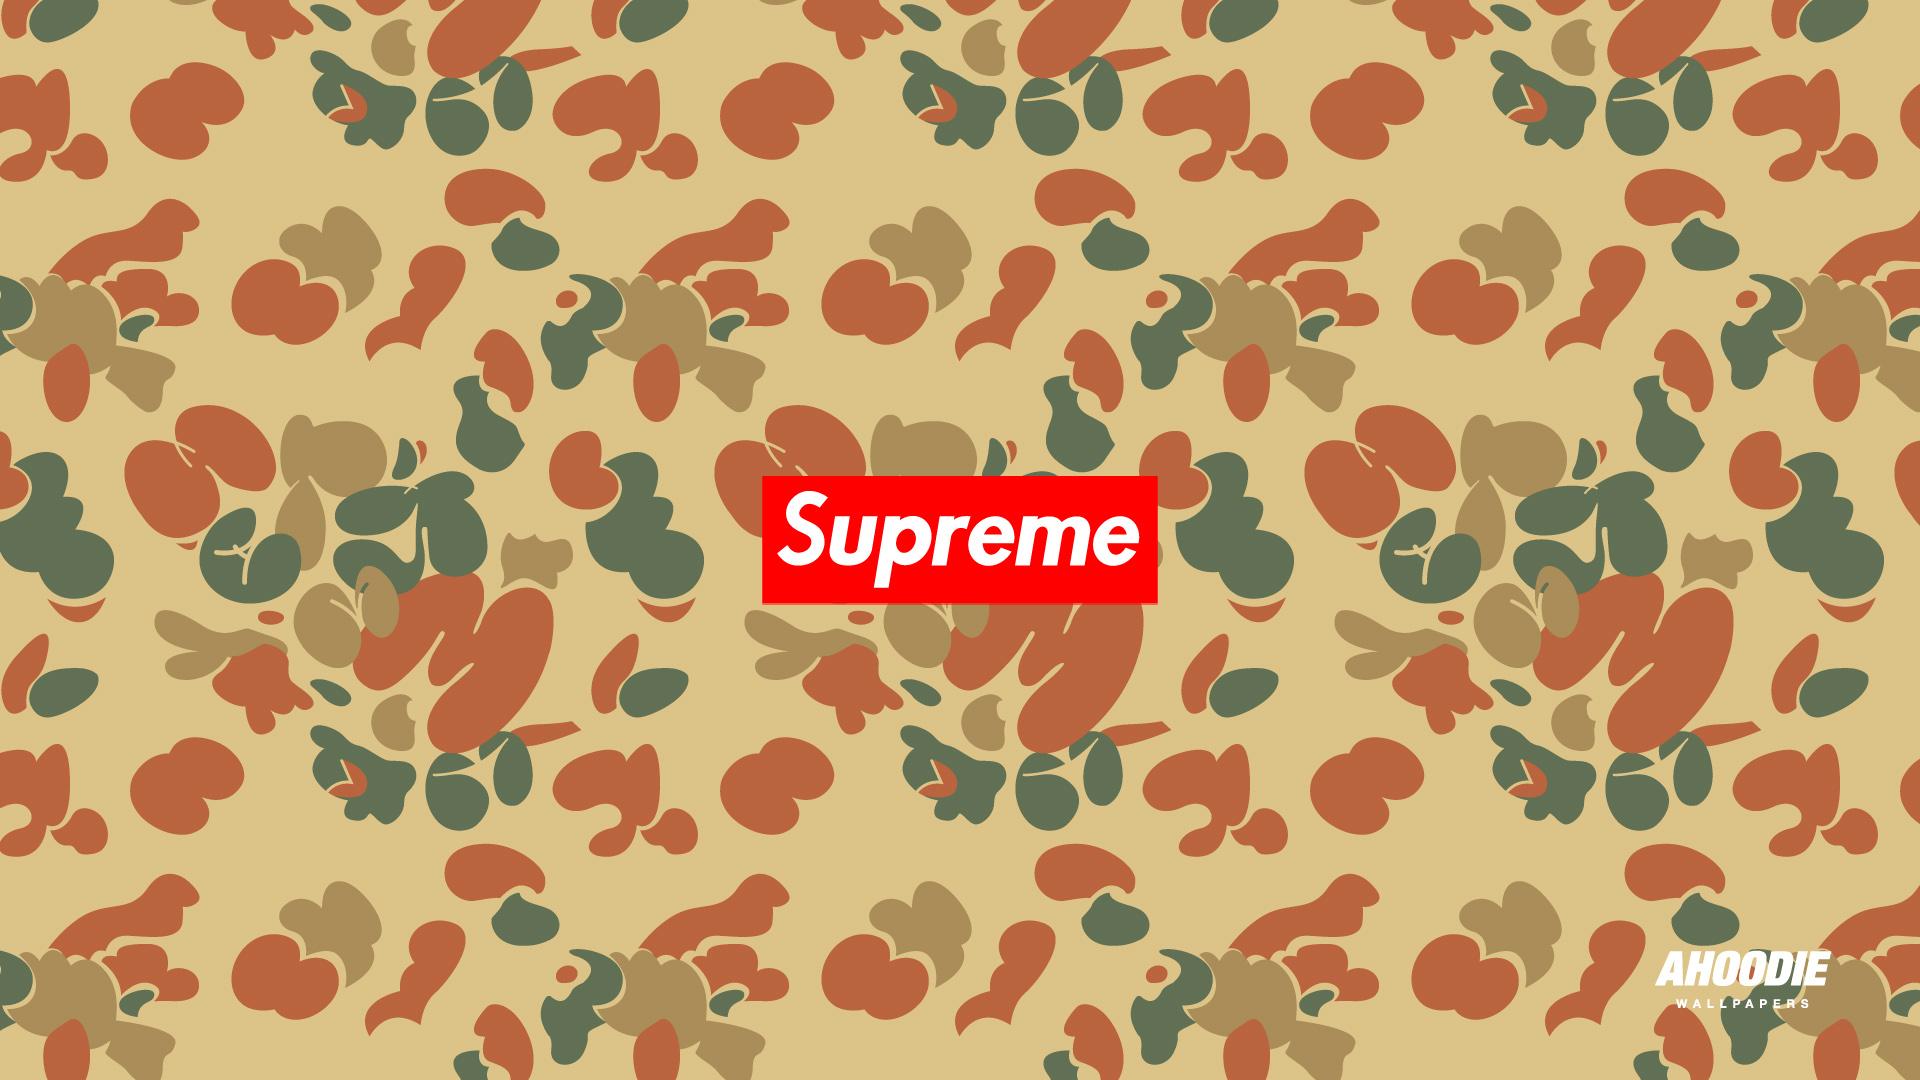 Supreme Tumblr Background. Supreme